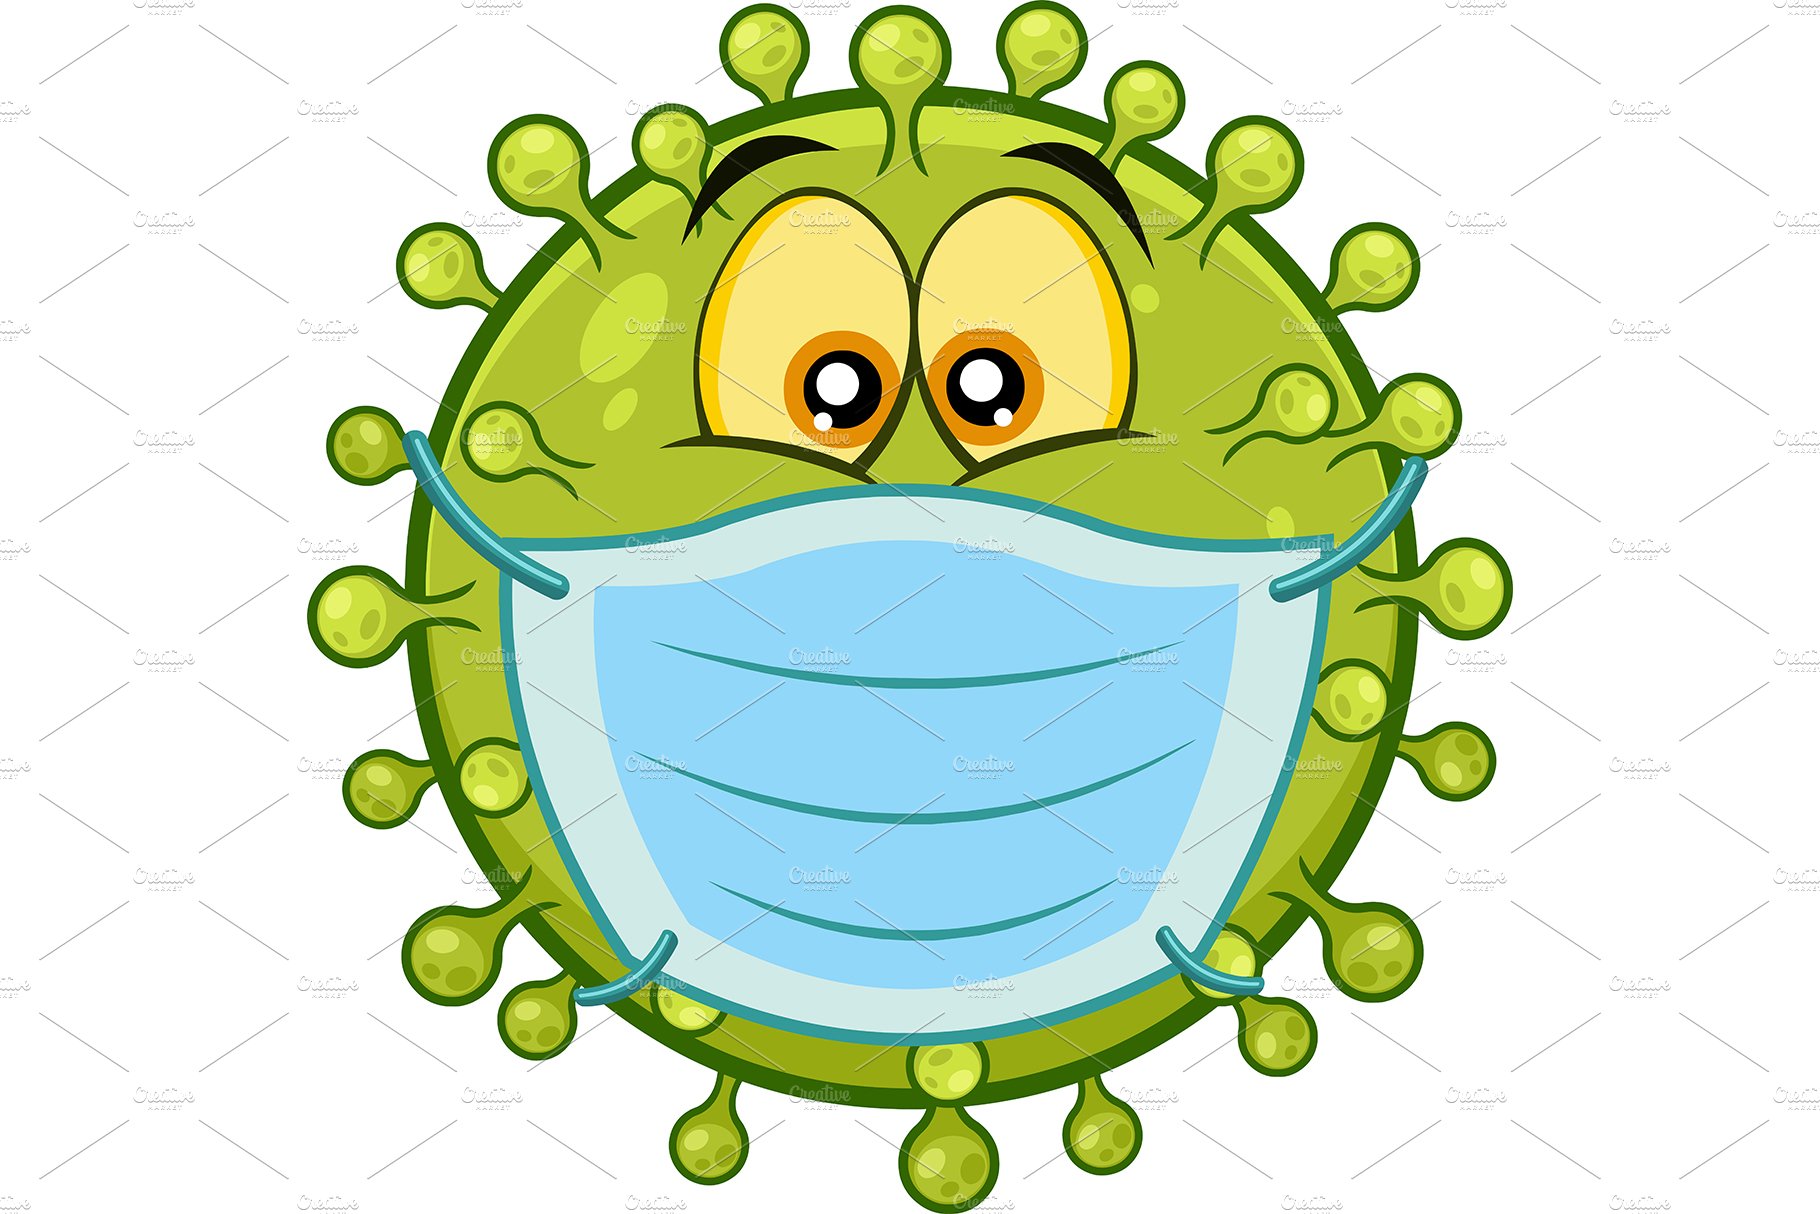 Surprised Coronavirus (COVID-19) cover image.